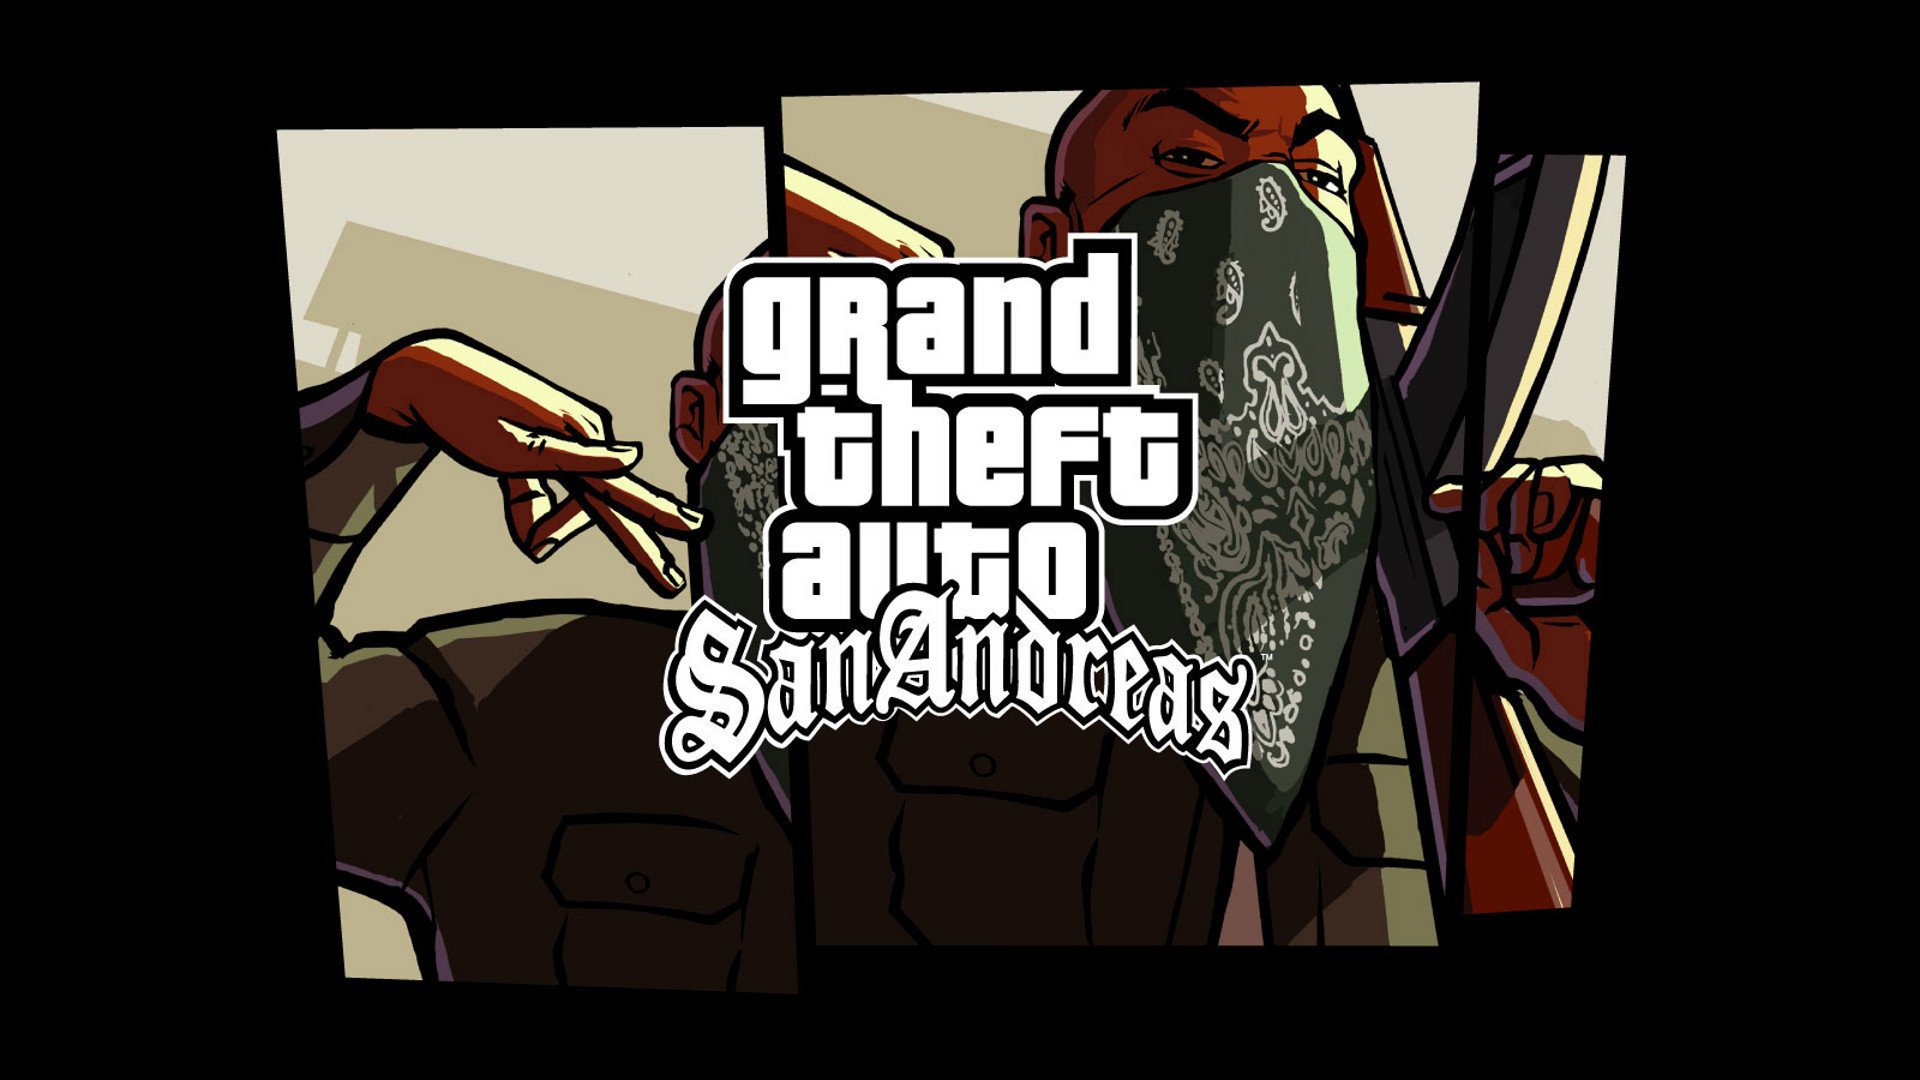 Awesome Grand Theft Auto: San Andreas (GTA SA) free wallpaper ID:72707 for hd 1080p desktop